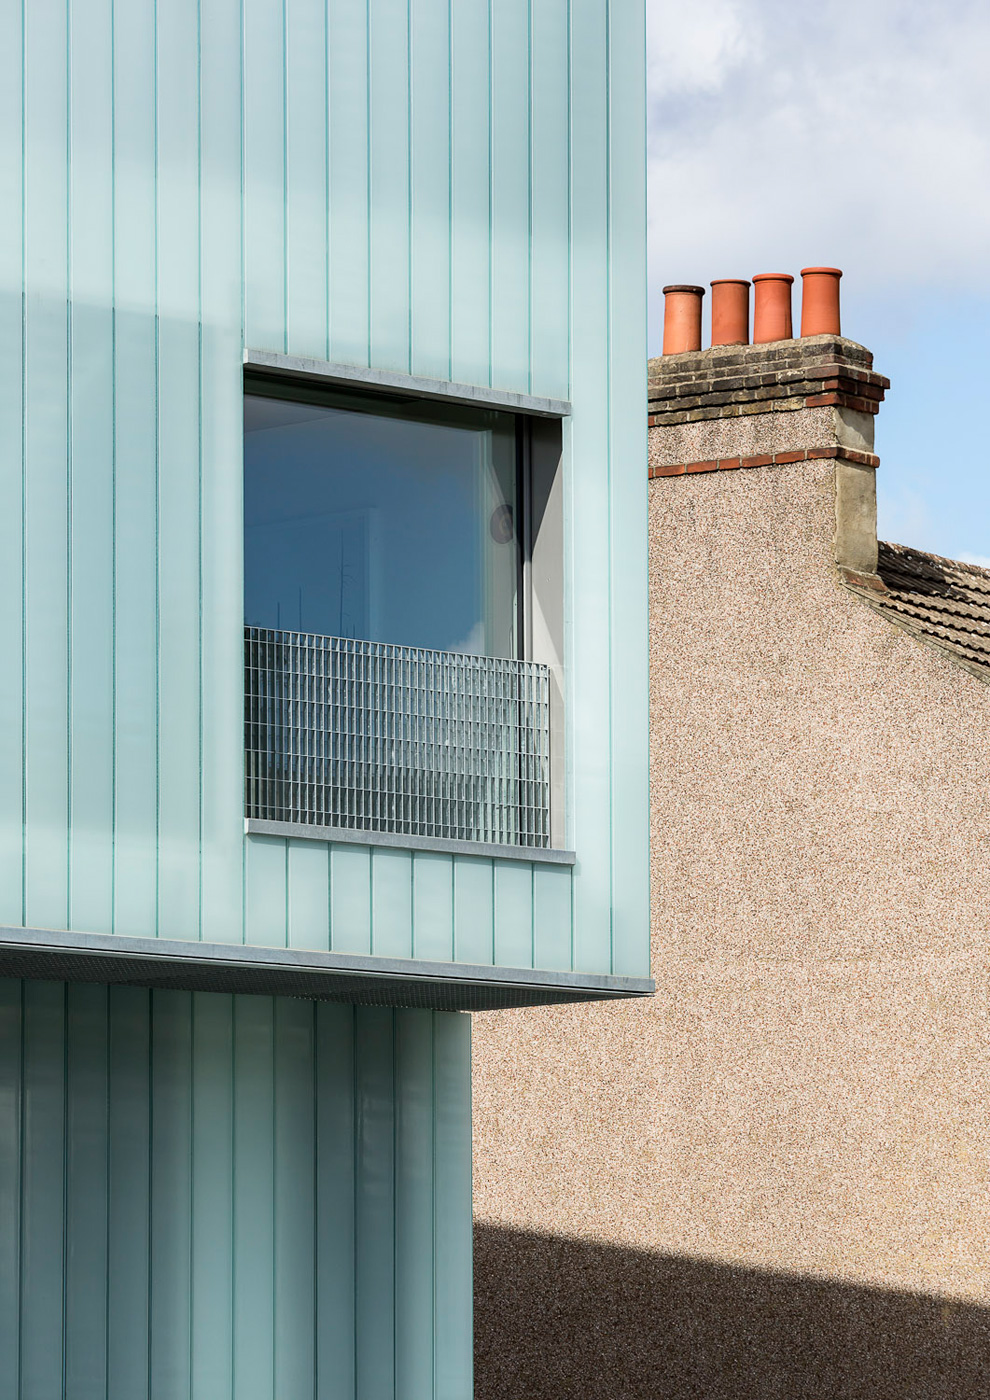 Slip House / Carl Turner Architects